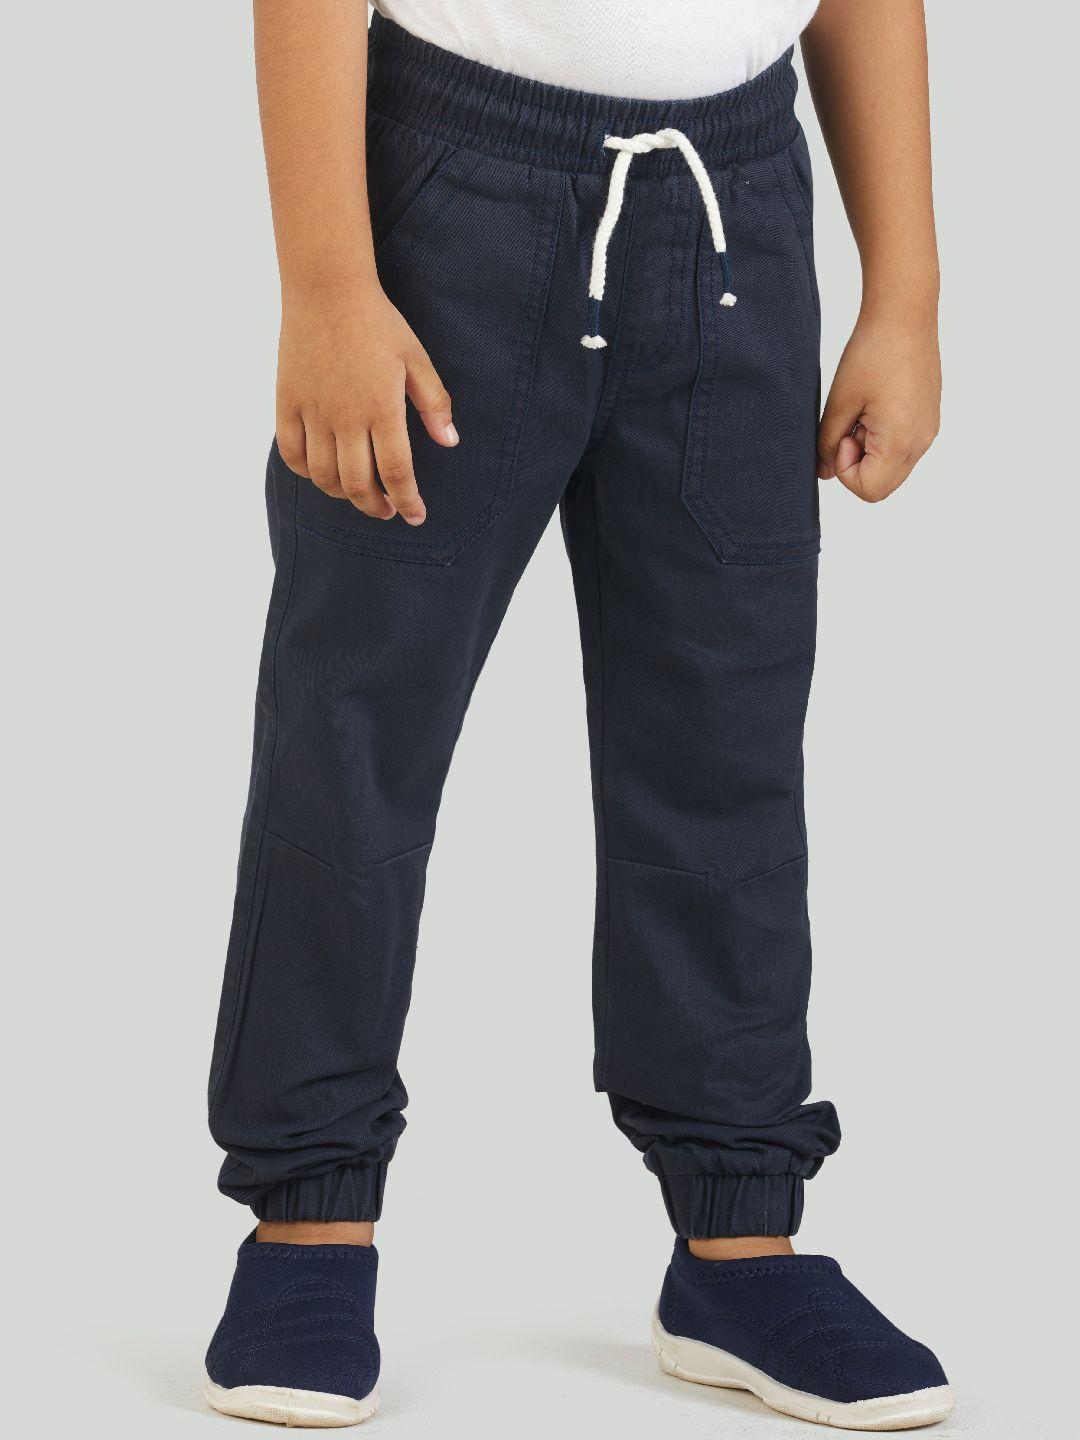 zalio boys navy blue joggers trousers